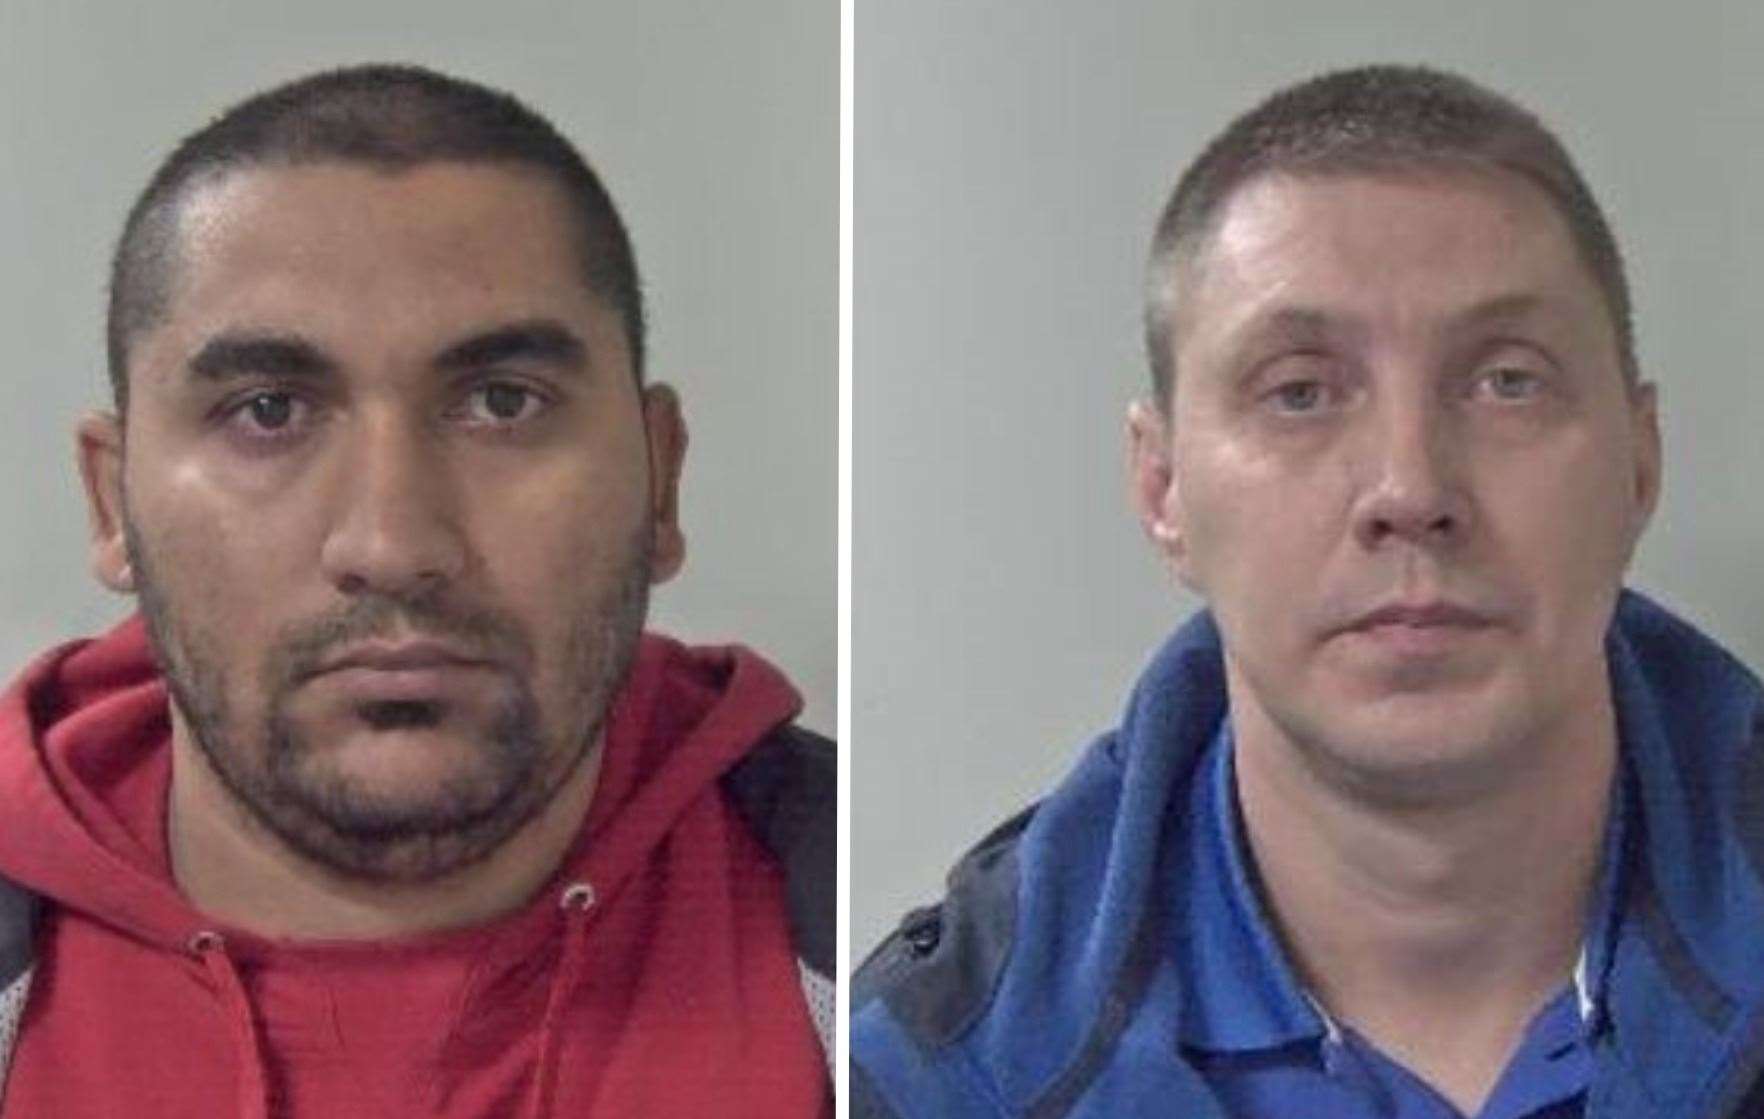 Ionut-Nando Mocanu, left, and Genadijs Kuznecovs were caught trying to smuggle people into the UK. Photo: Border Force